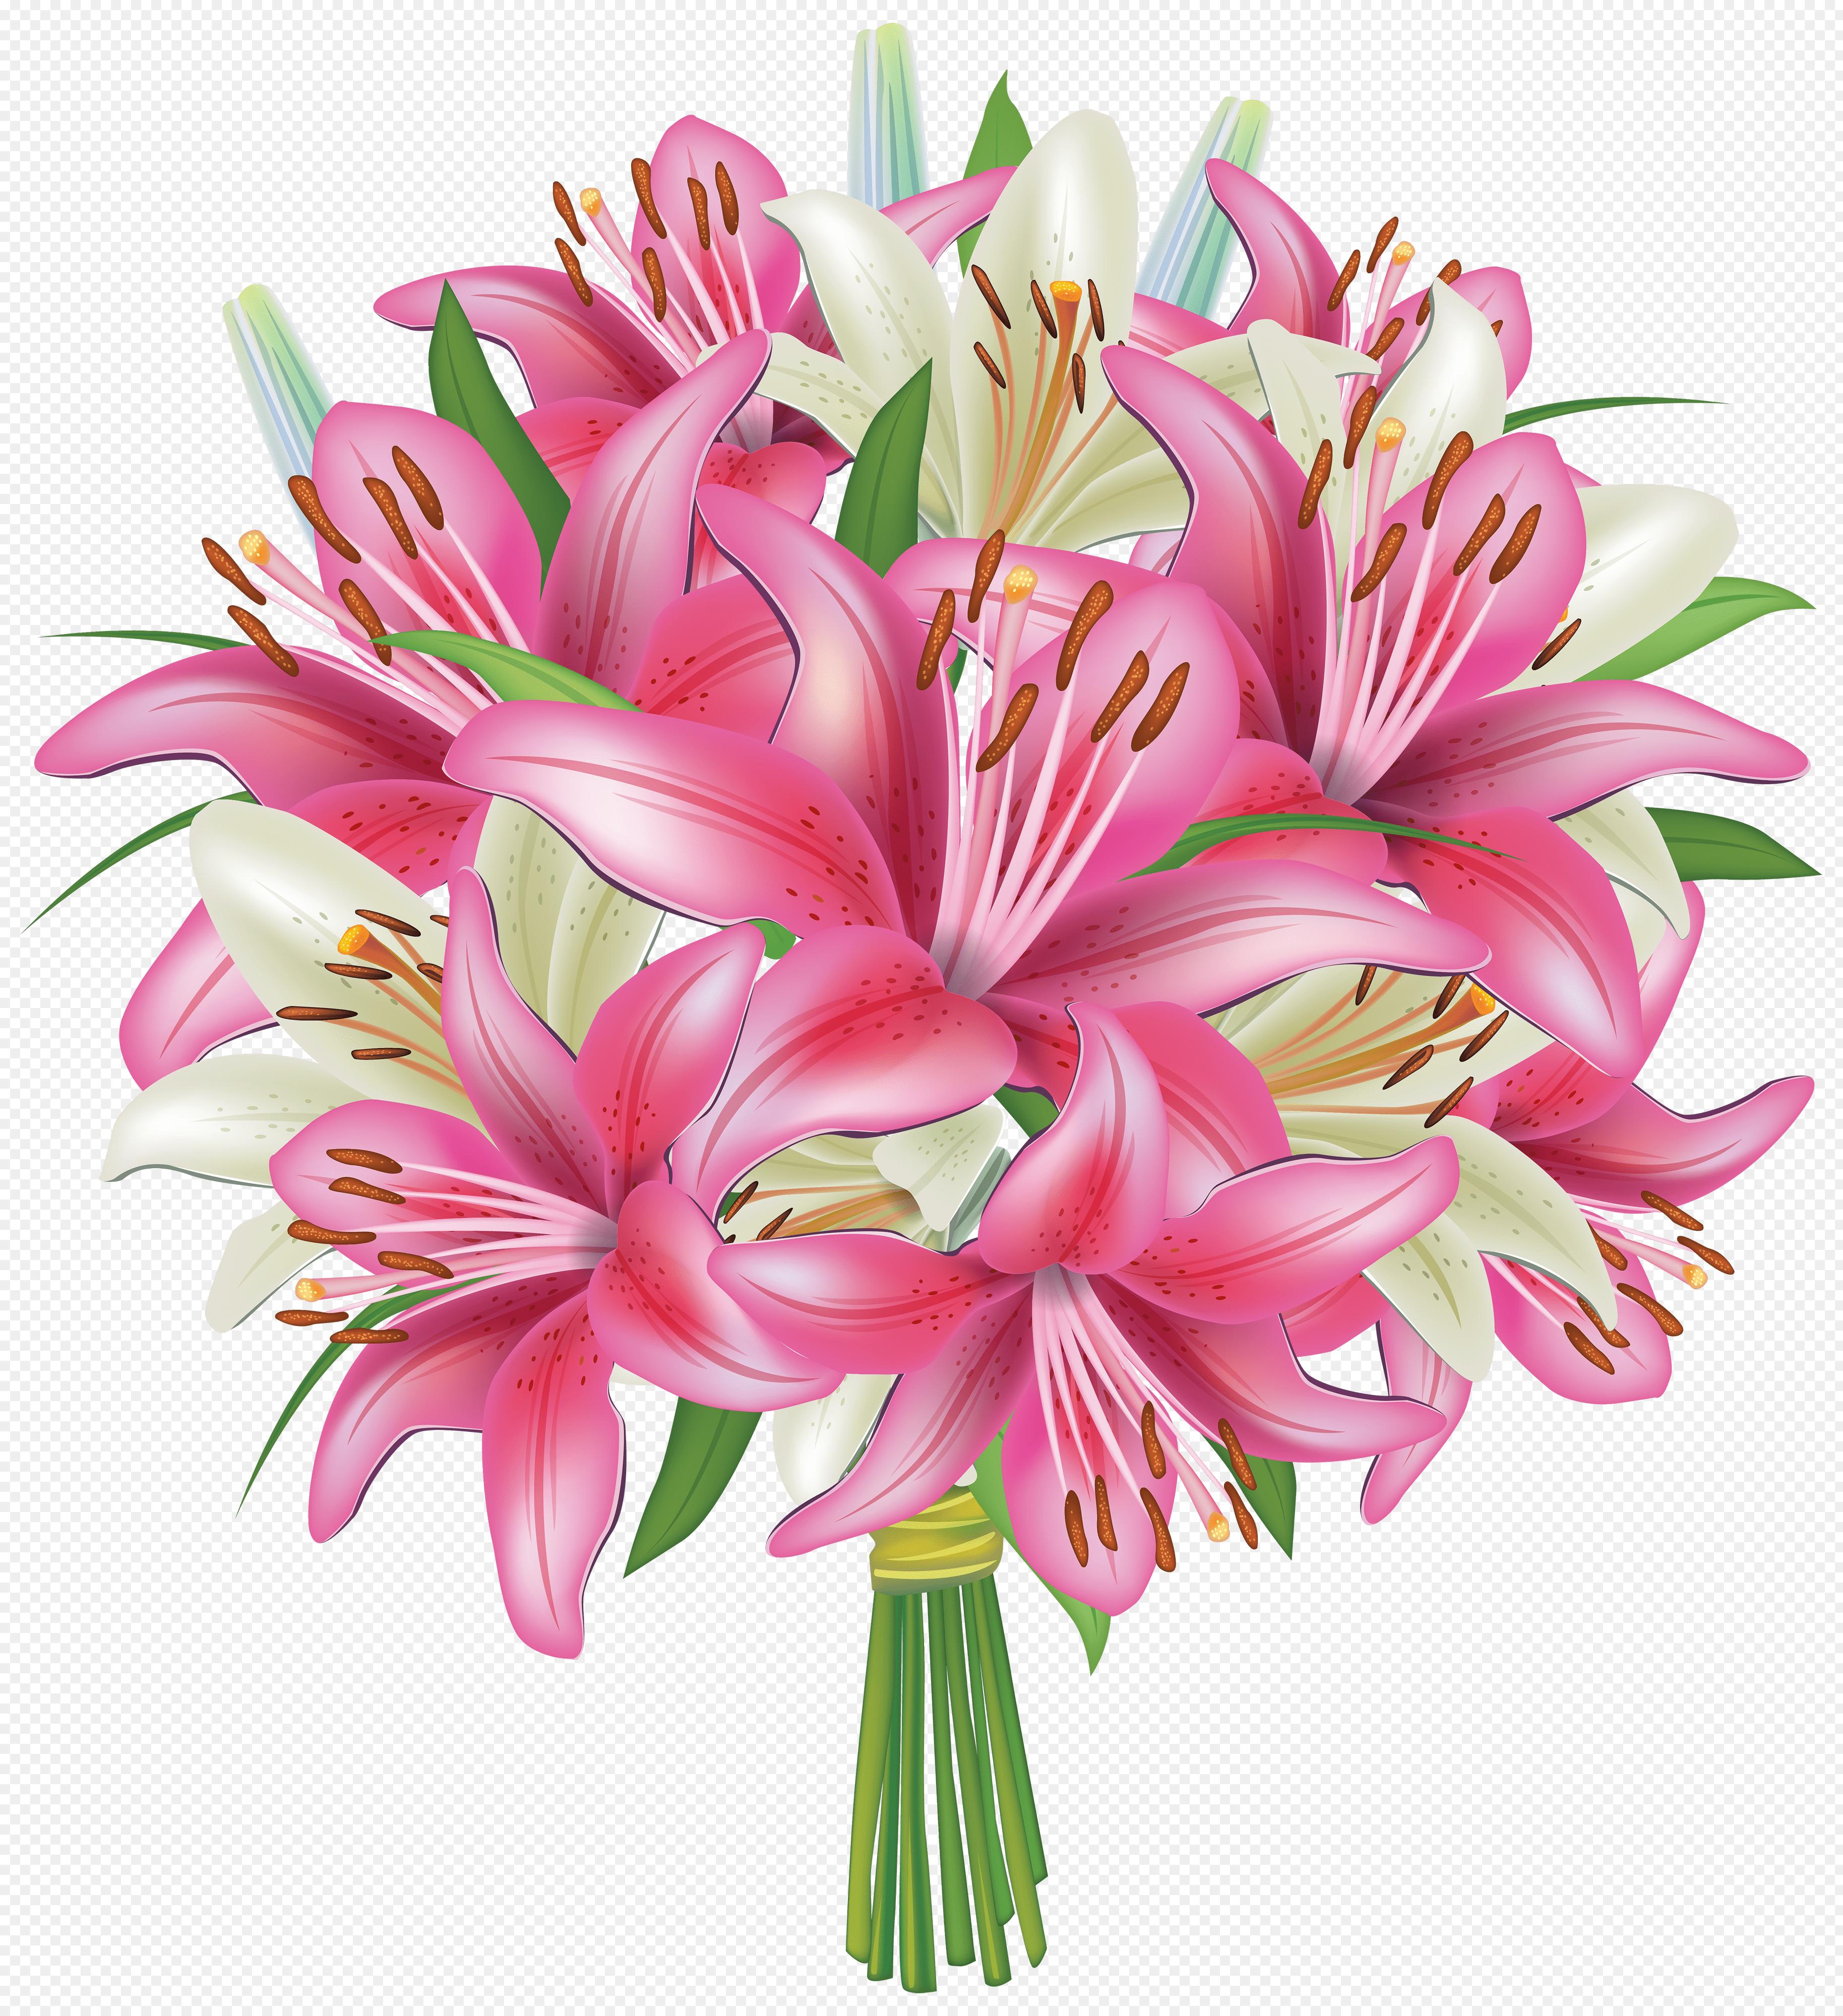 Bouquets Of Flowers Clip Art Free Flower Bouquet Cliparts Download 